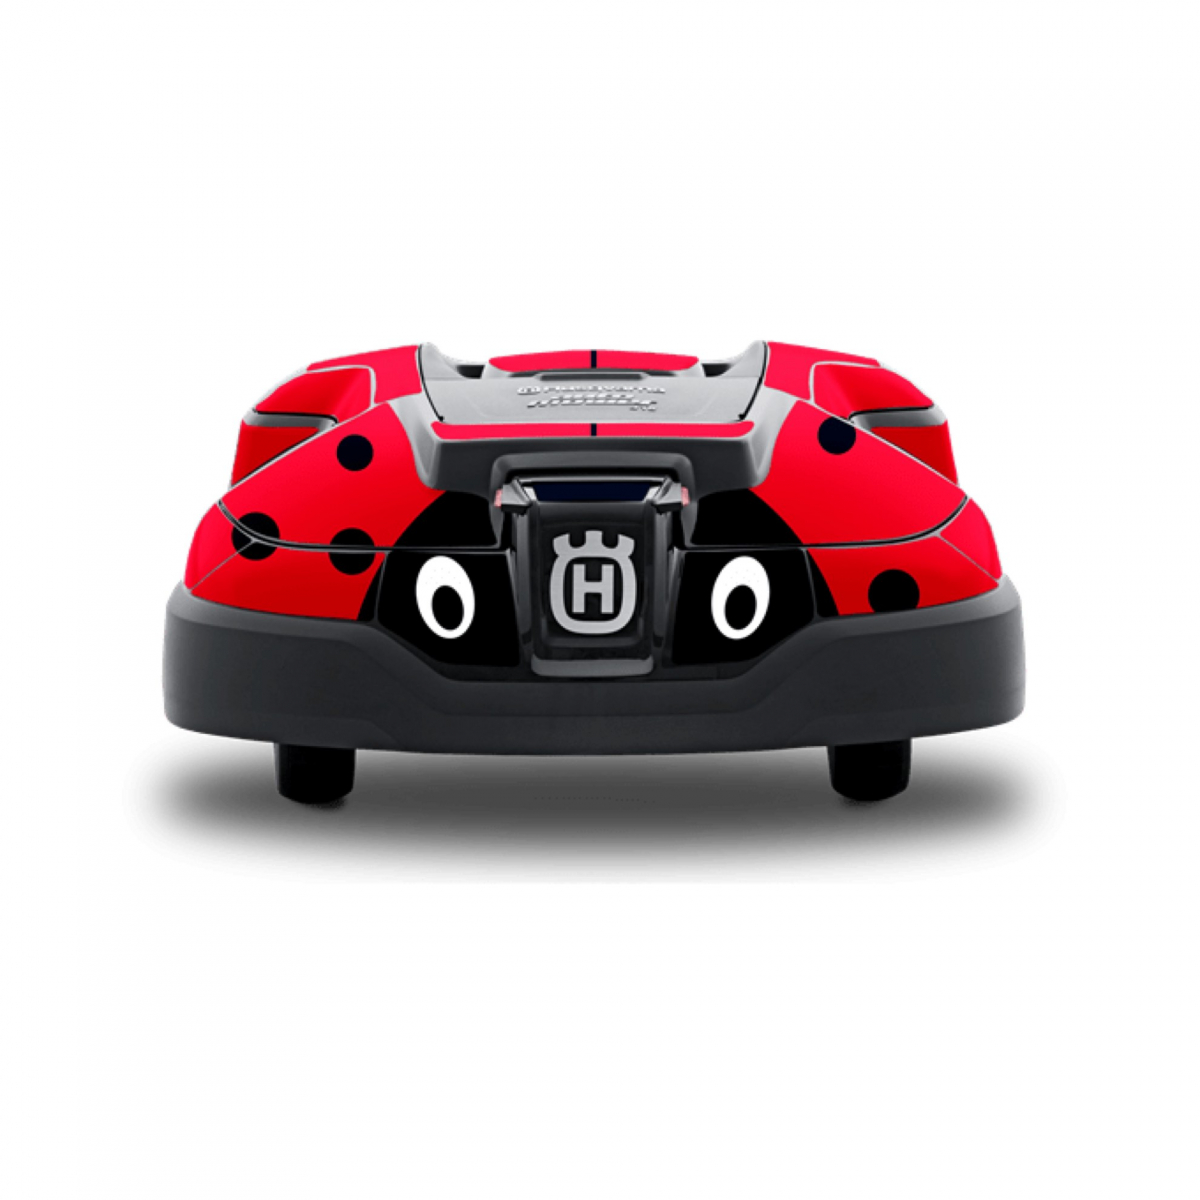 Sticker Monster edition (Red) - Robot mower Husqvarna AUTOMOWER